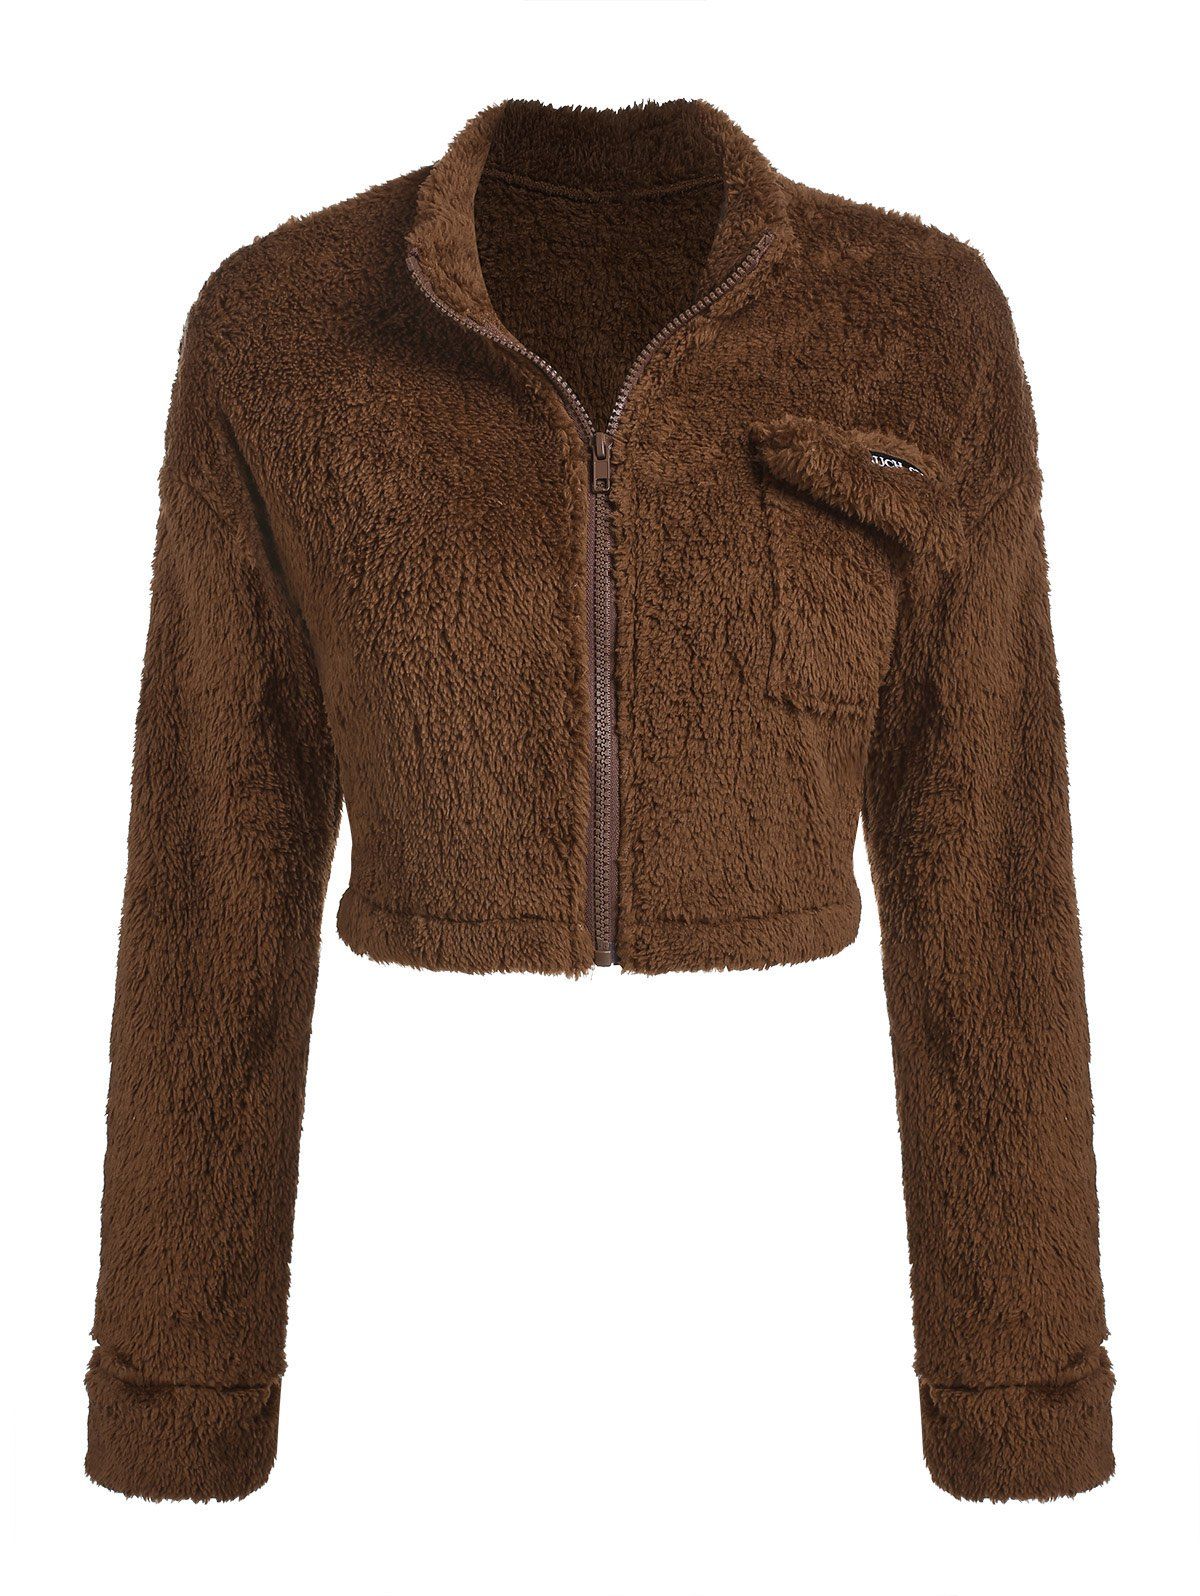 Faux Fur Flap Pockets Cropped Fuzzy Jacket - DEEP COFFEE S